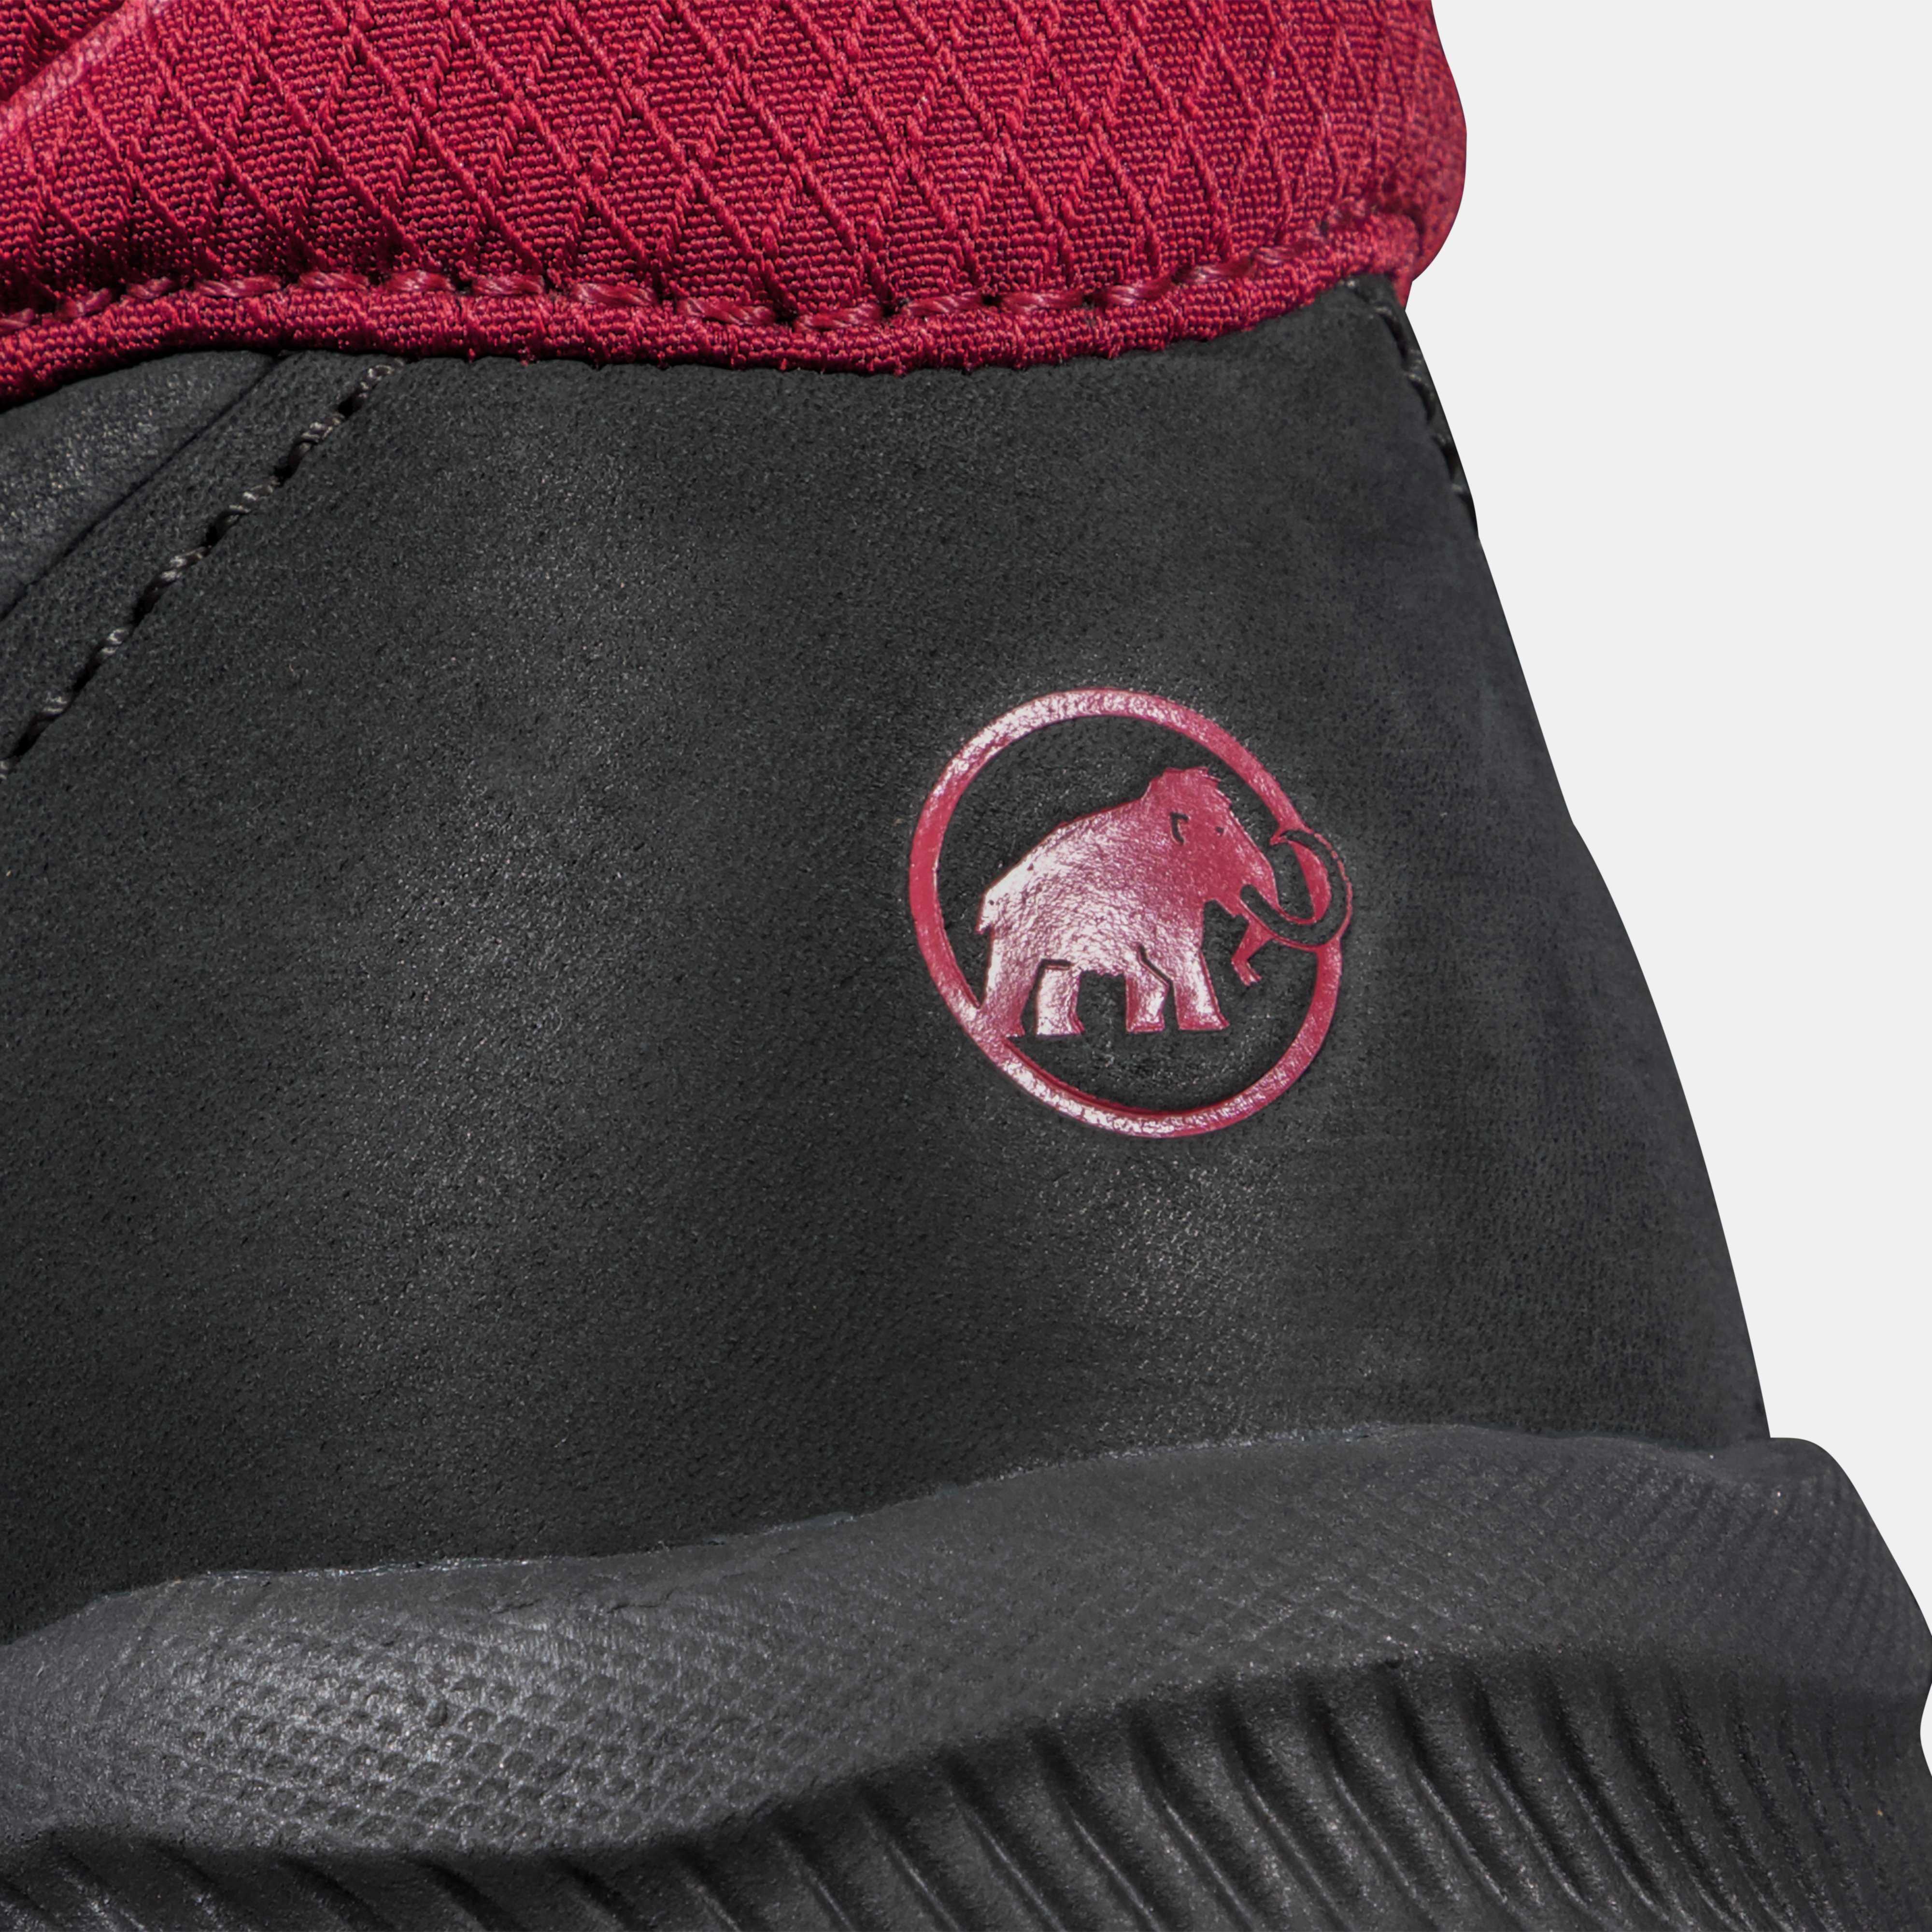 Mammut NOVA IV MID GTX - Hiking shoes - black/blood red/black - Zalando.de